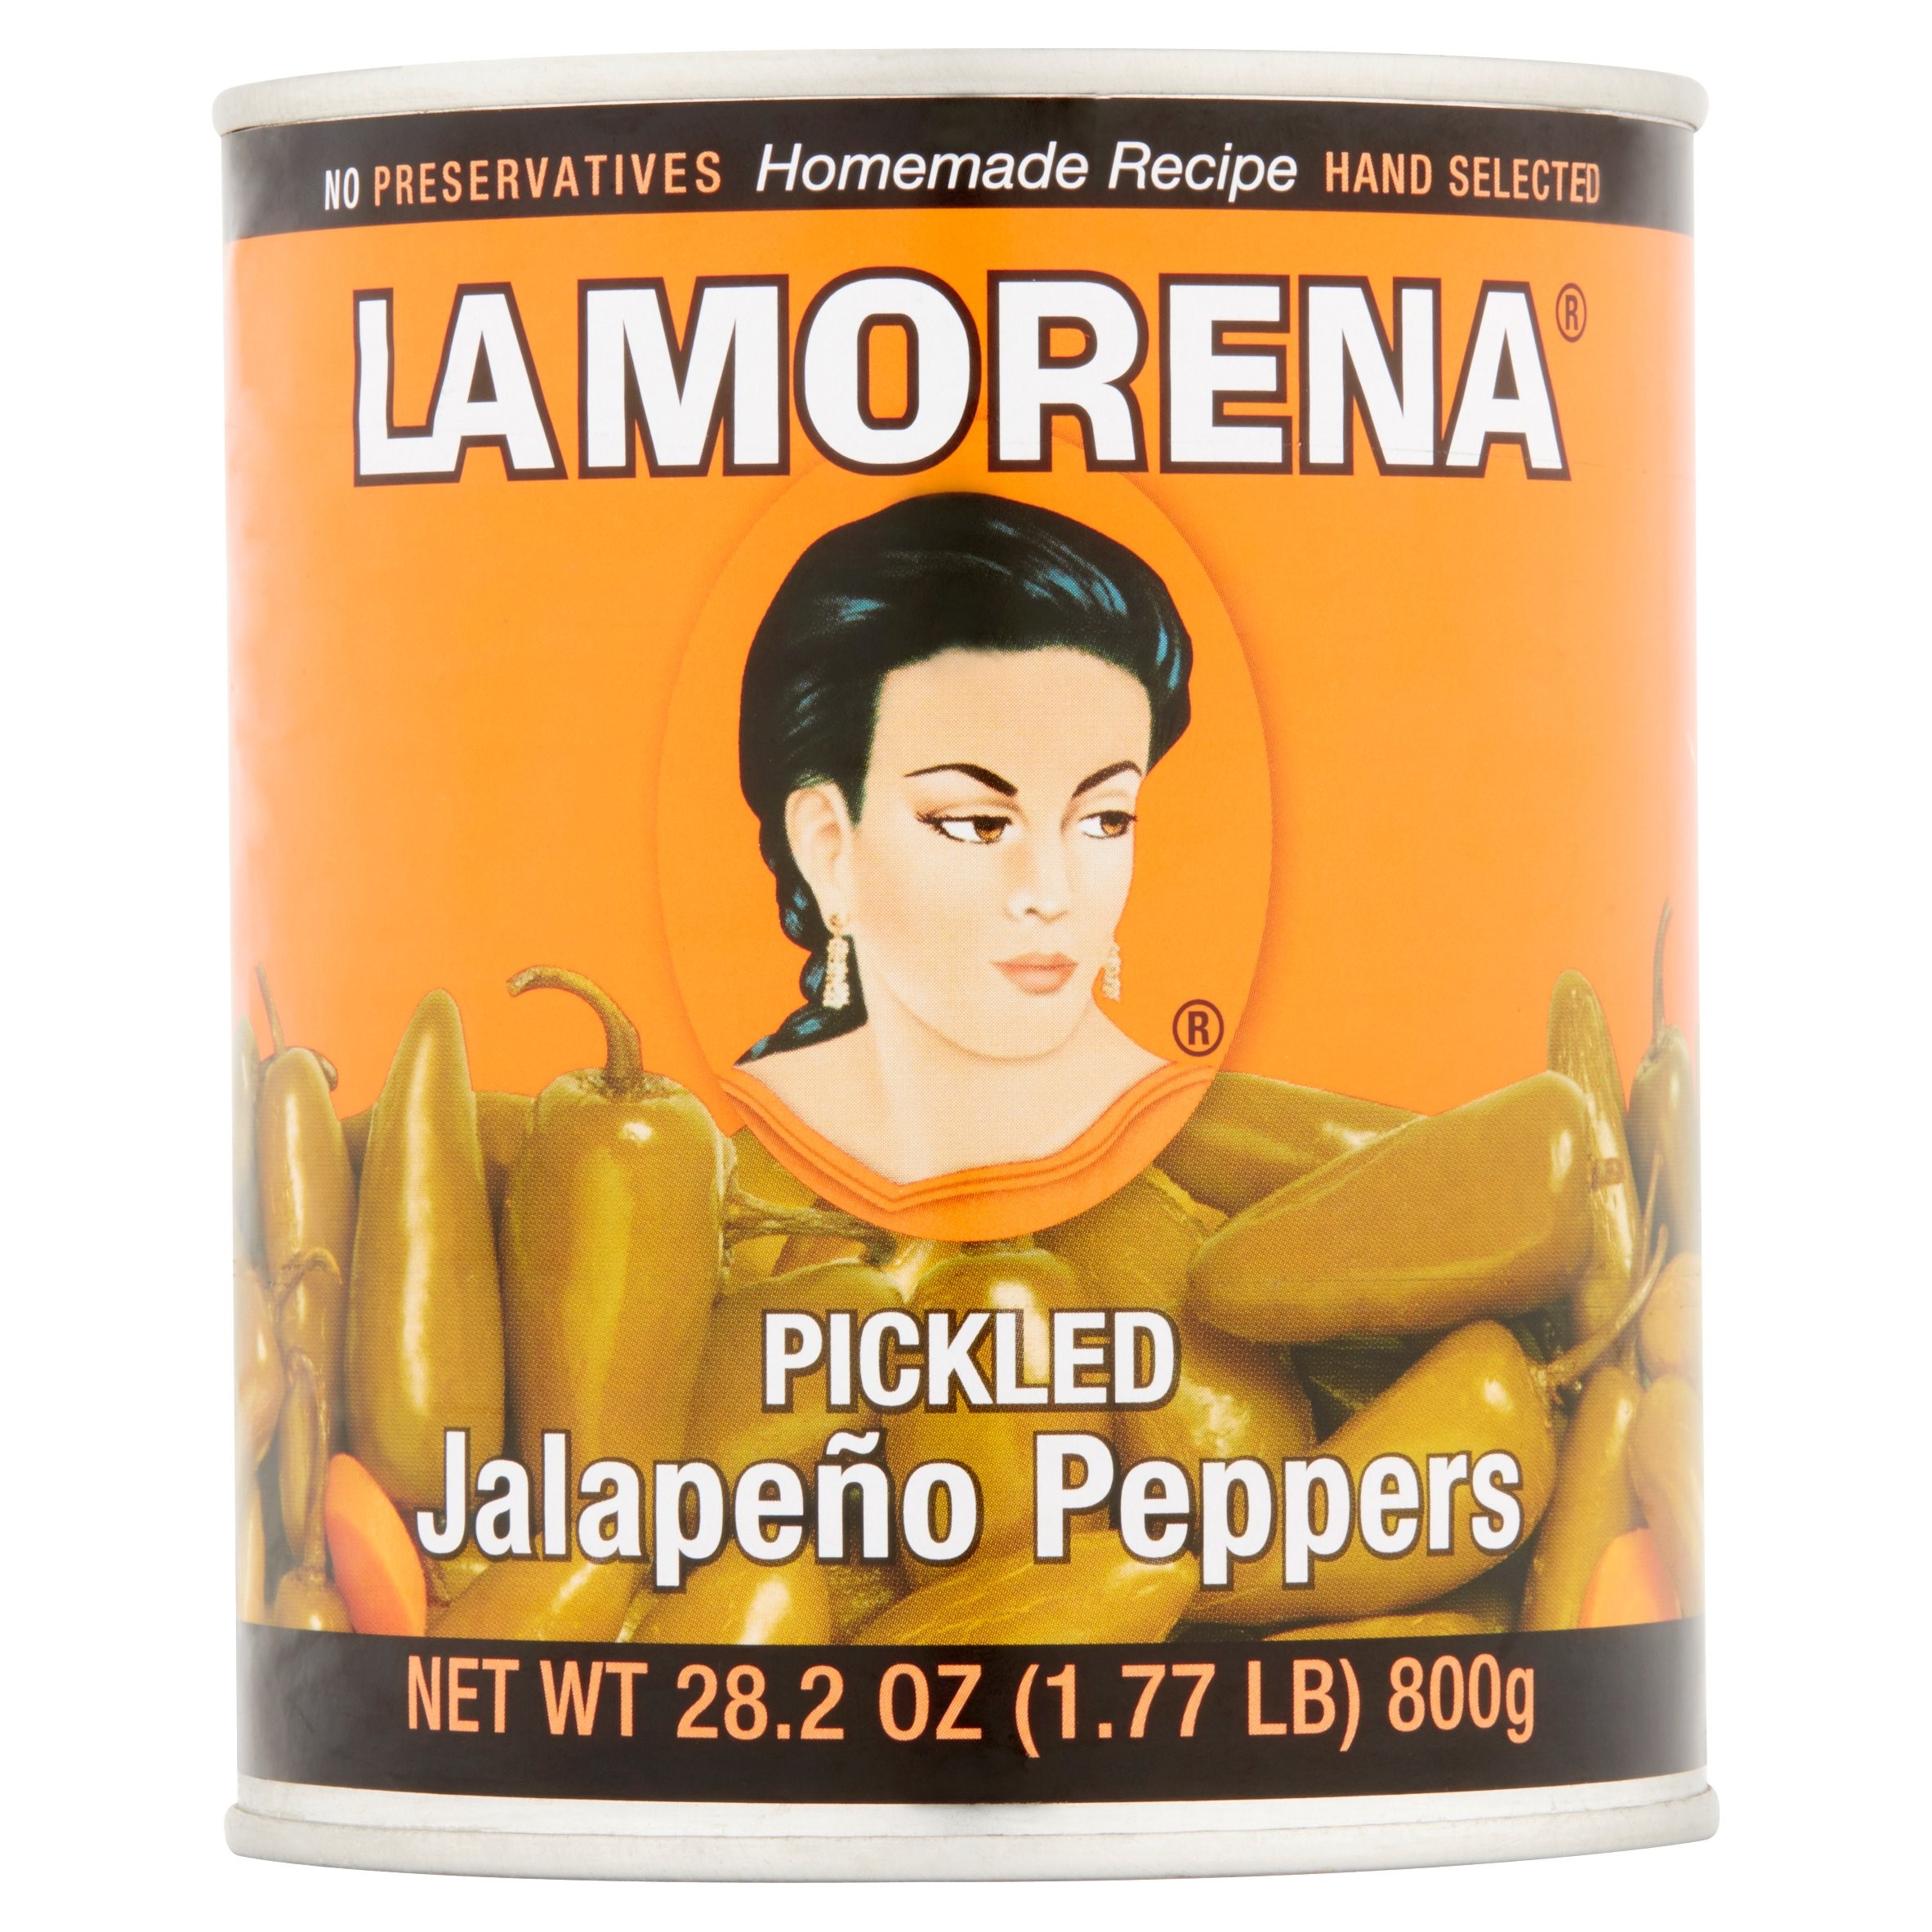 Lamorena Pickled Jalapeno Peppers, 28.2 oz - image 1 of 2